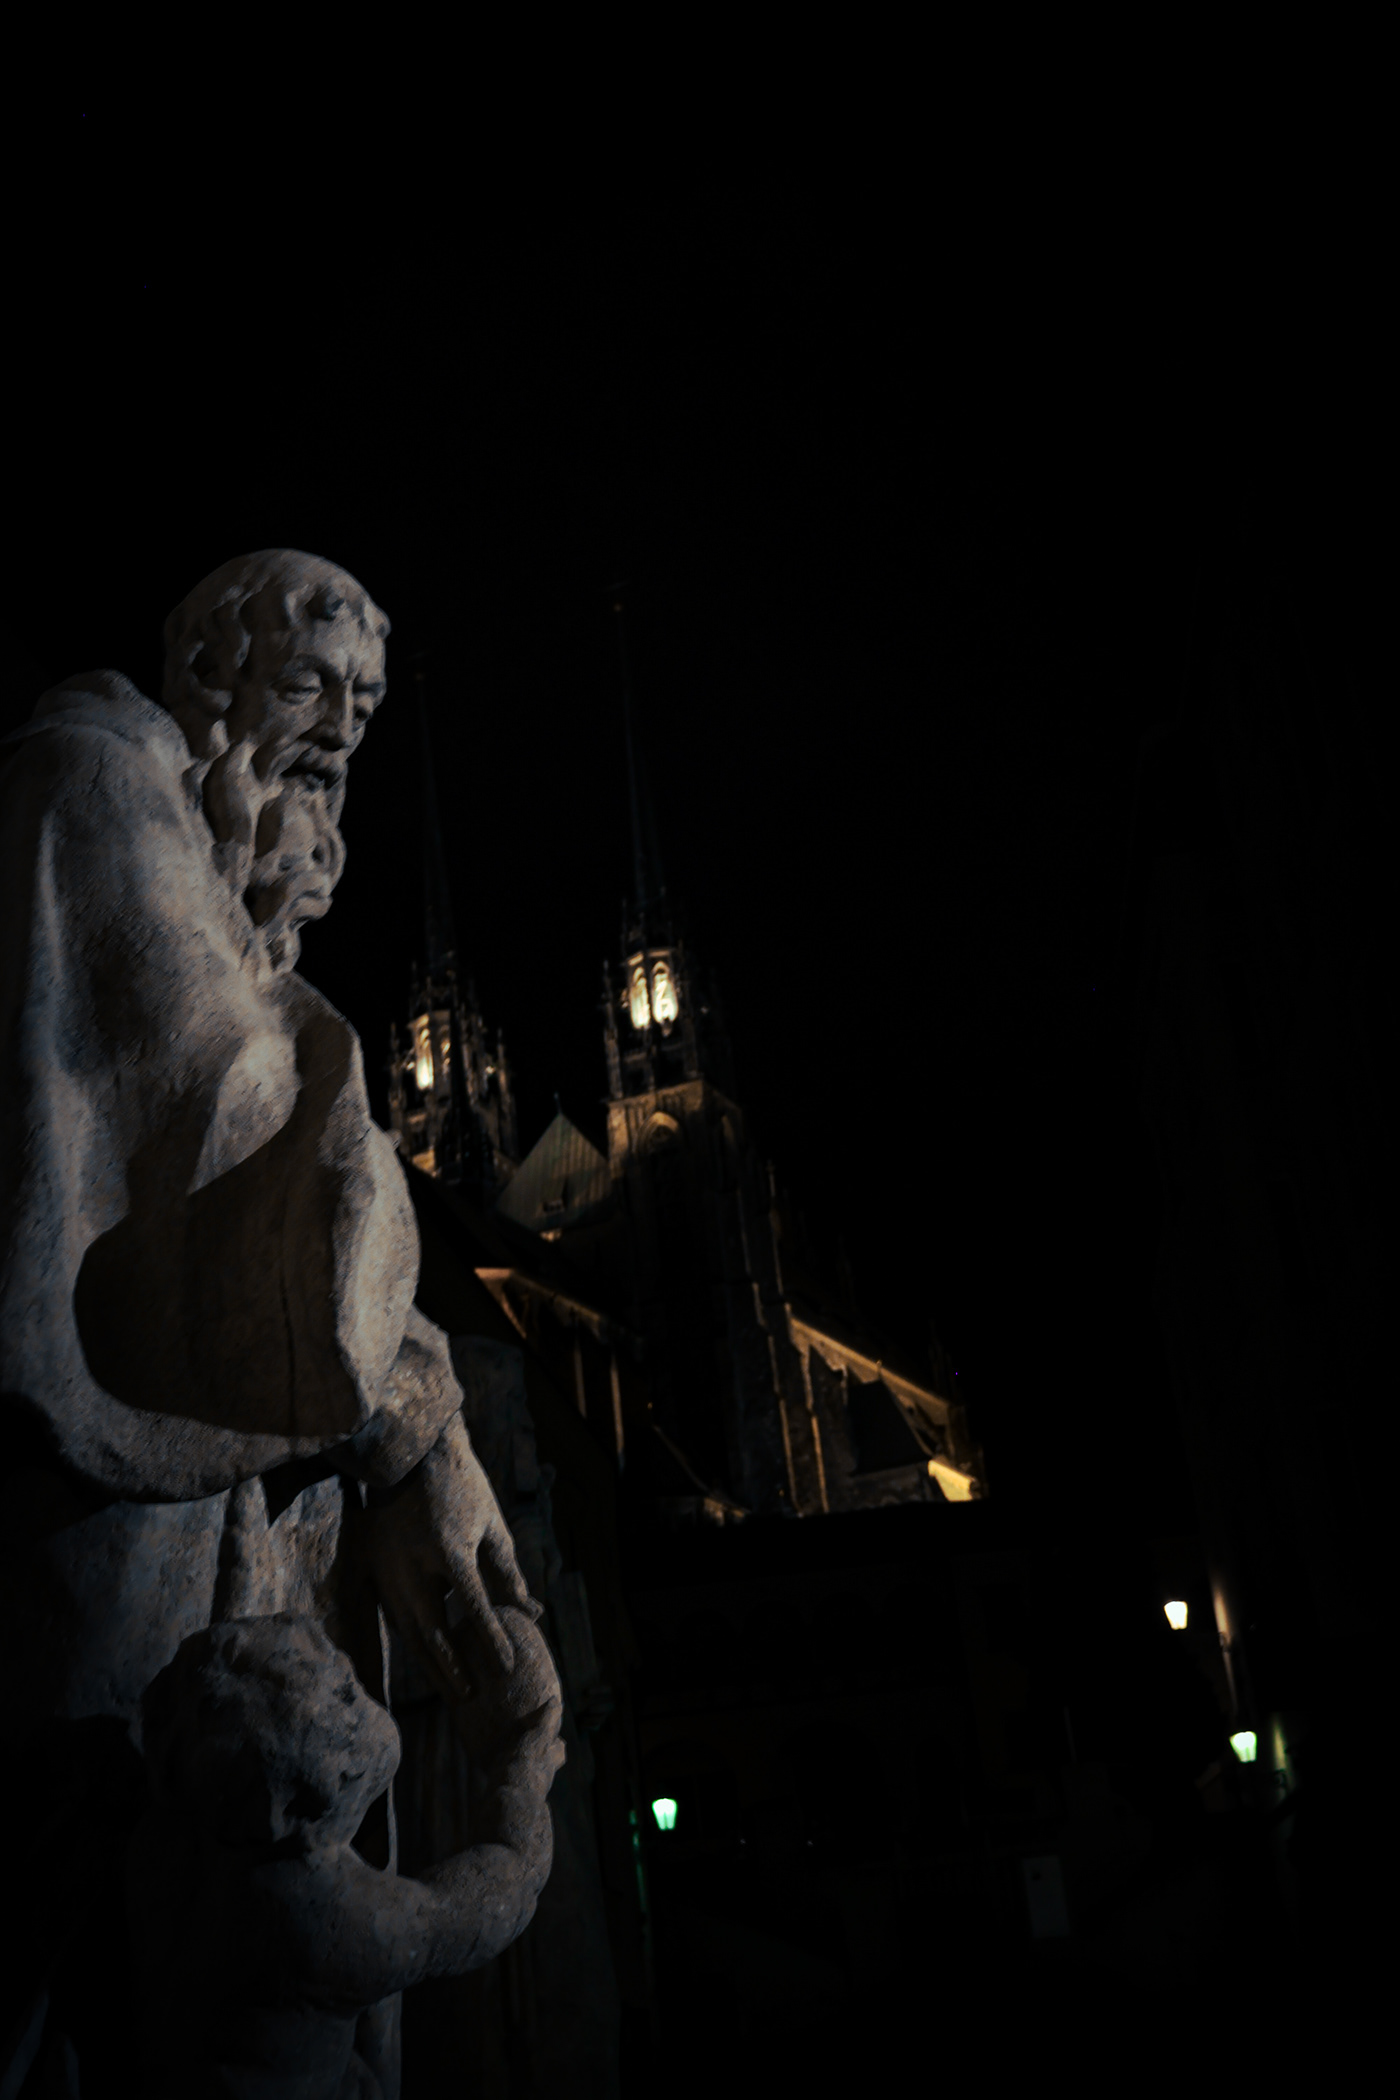 brno architecture city statue church walk night dark lights